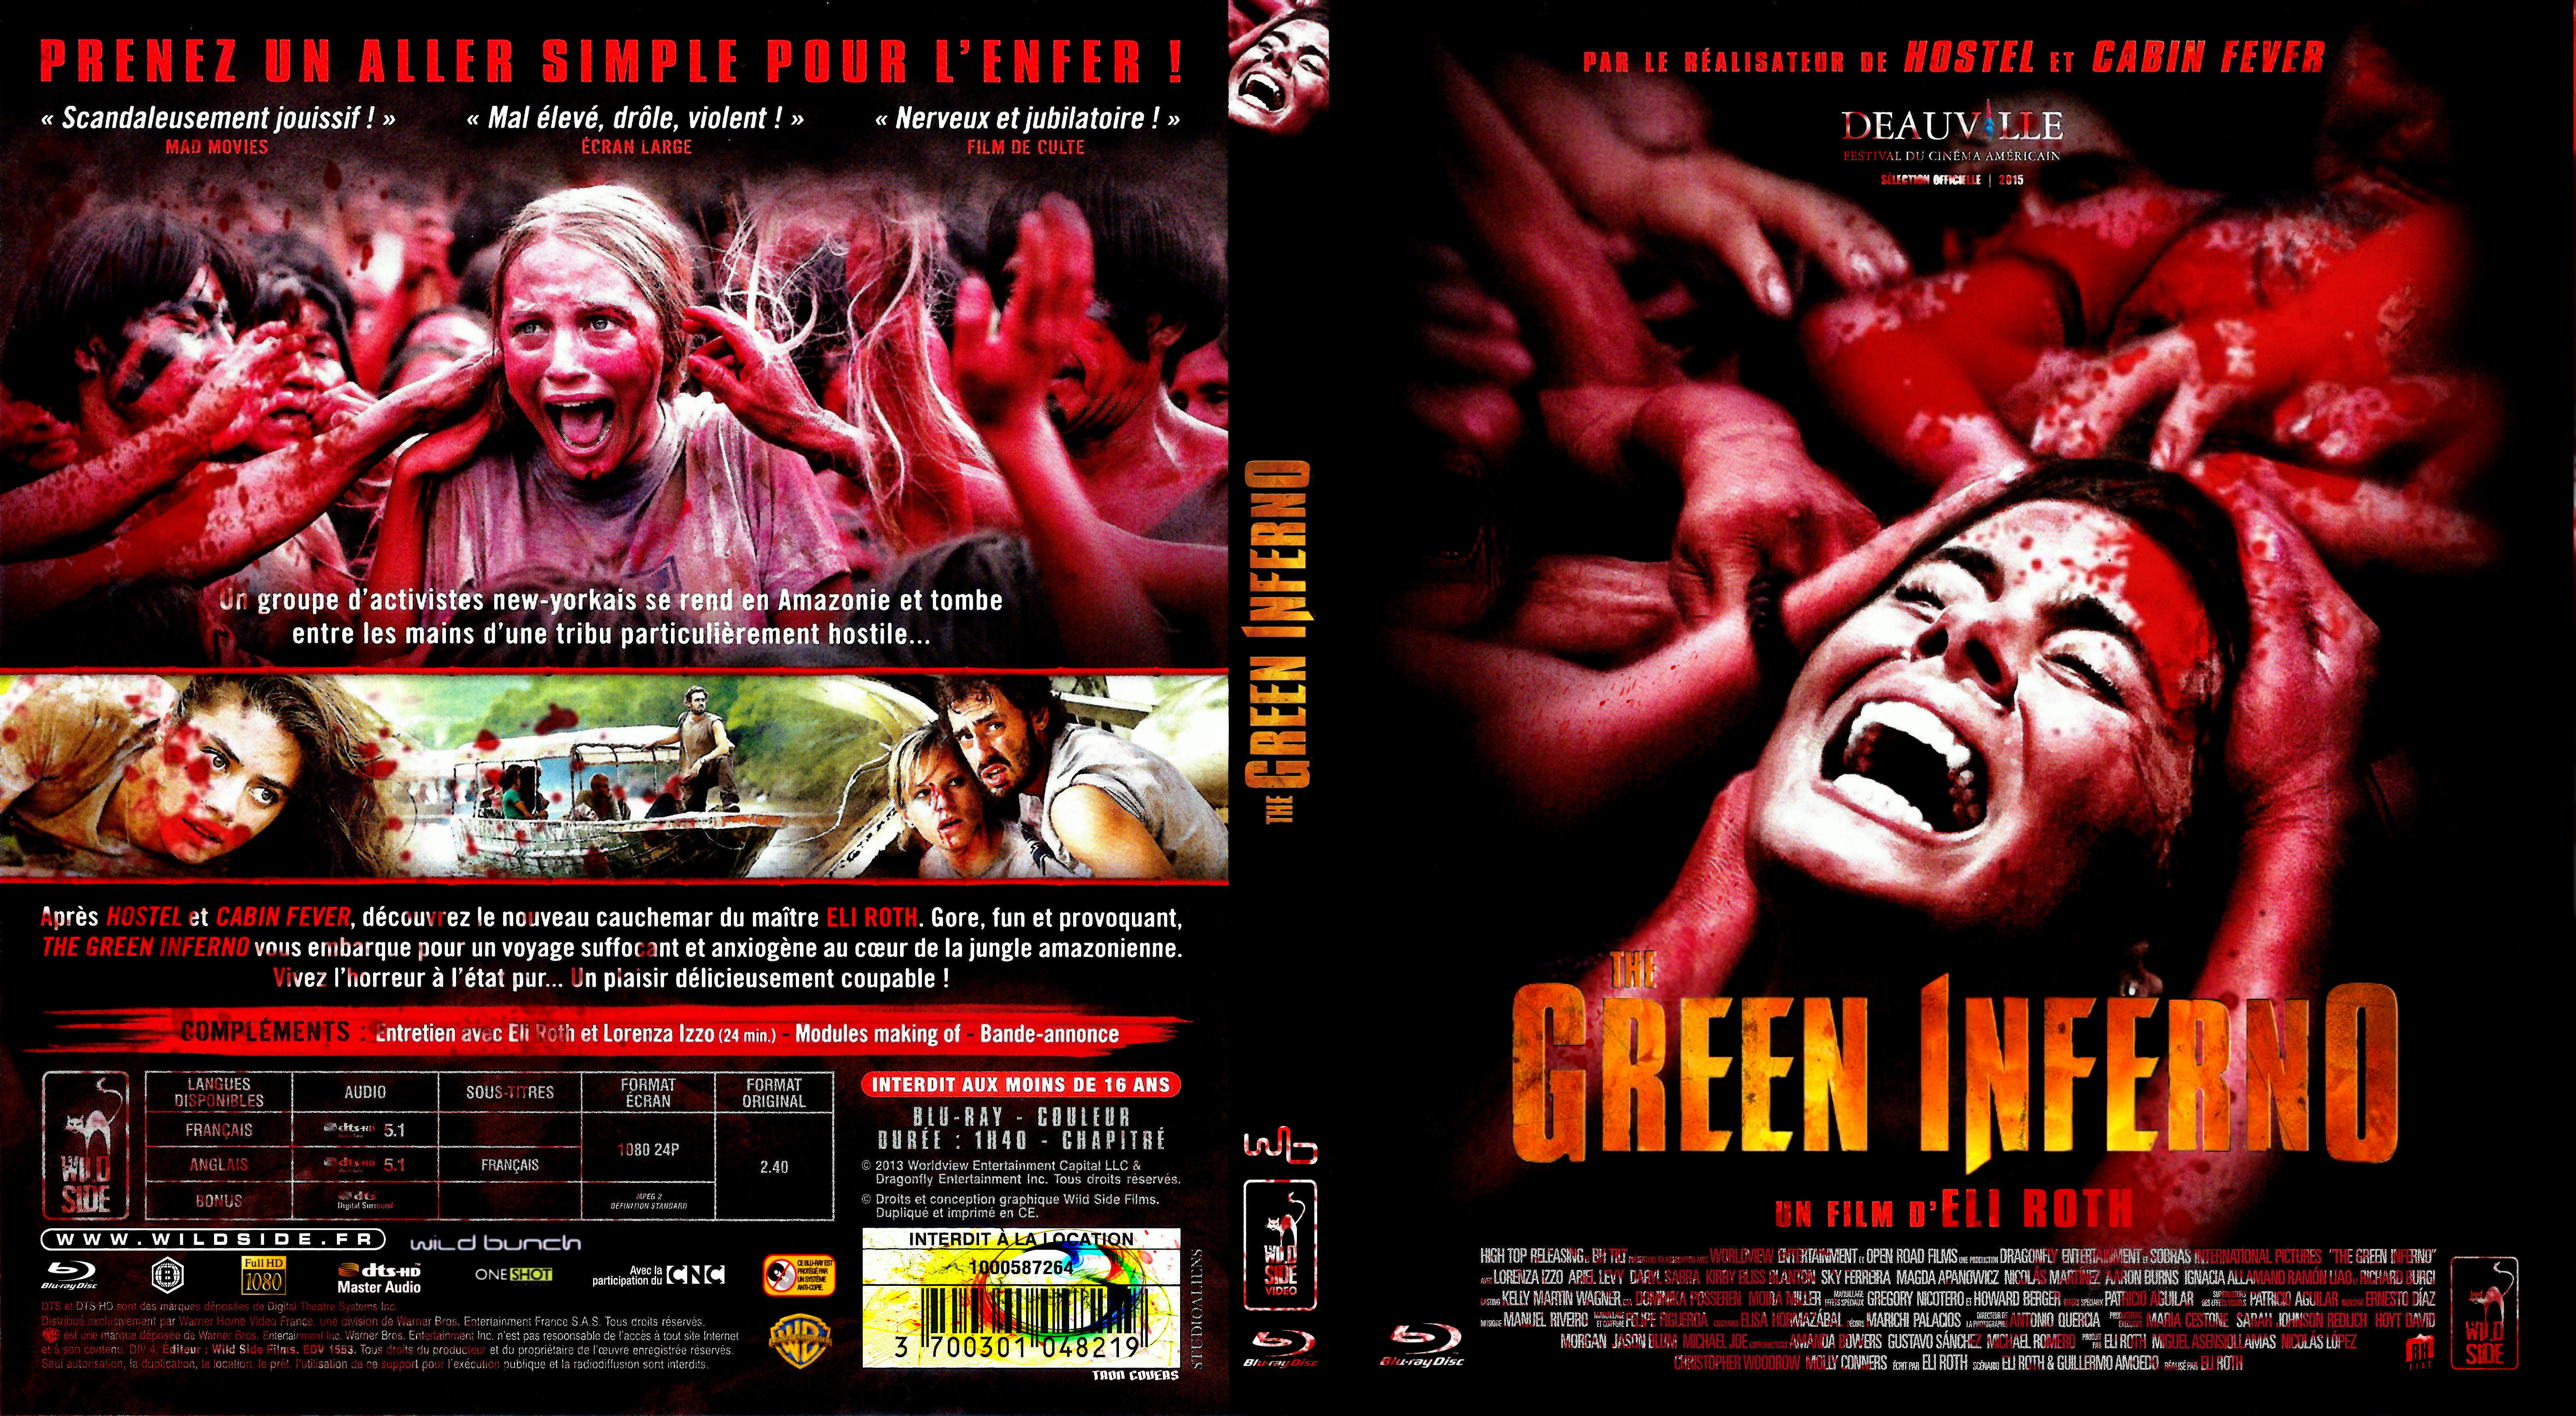 Jaquette DVD The green inferno custom (BLU-RAY)